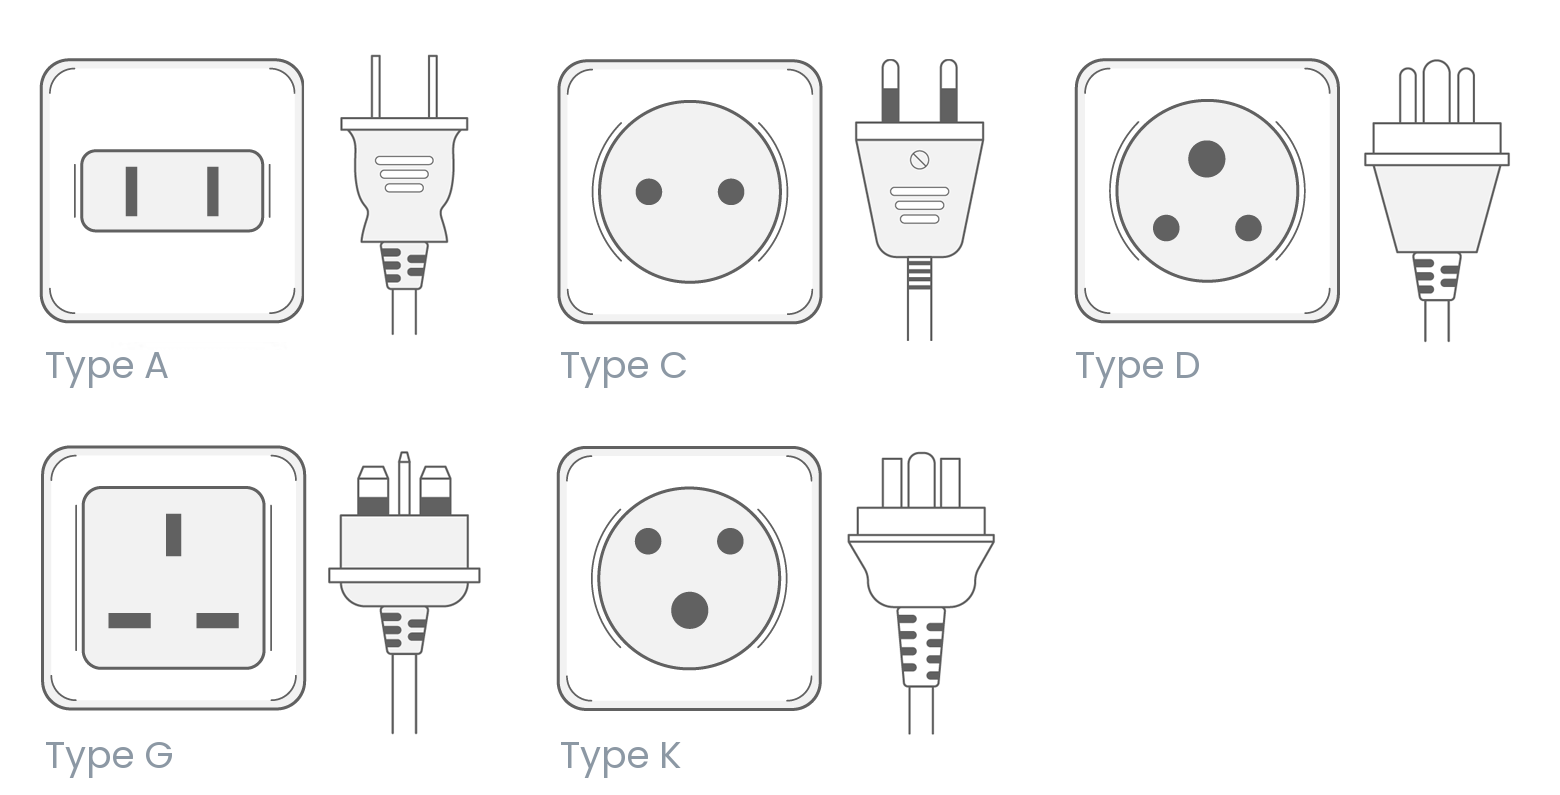 Bangladesh power plug outlet type G